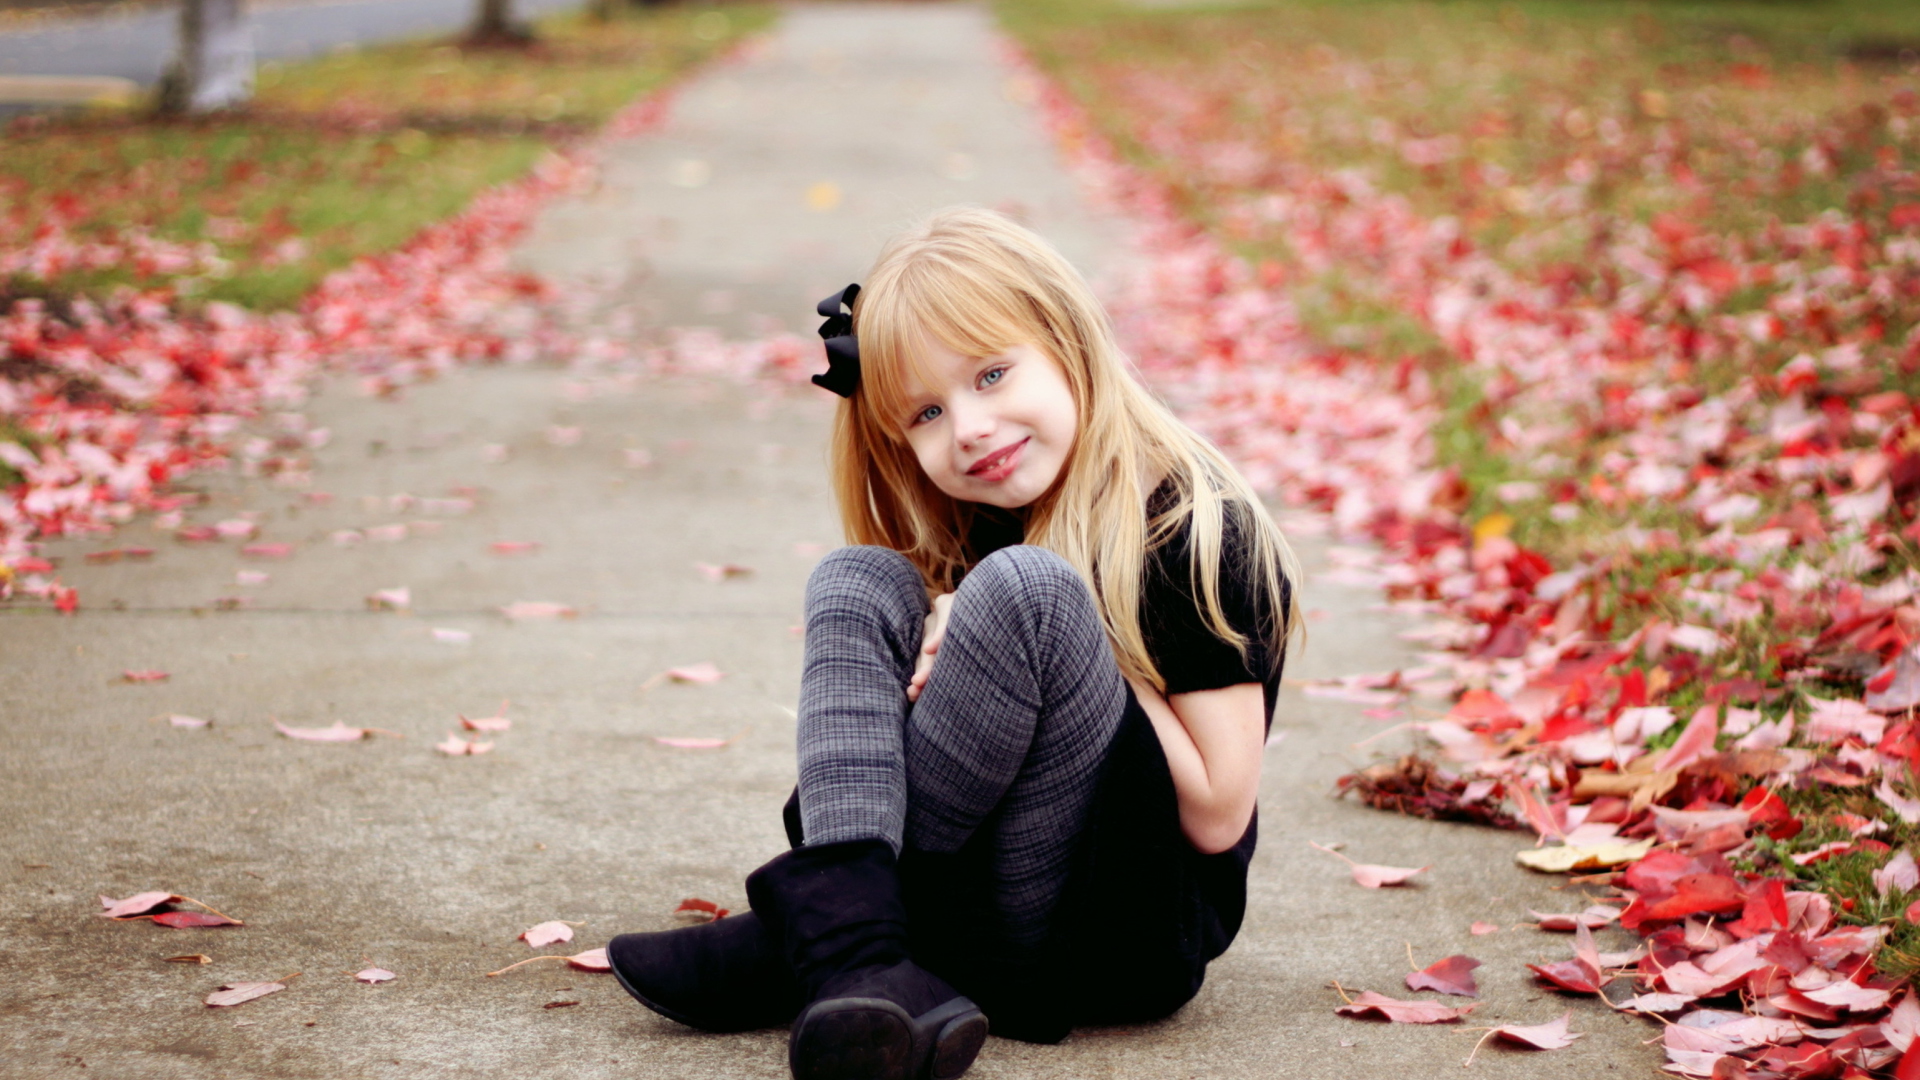 Обои Little Blonde Girl In Autumn Park 1920x1080